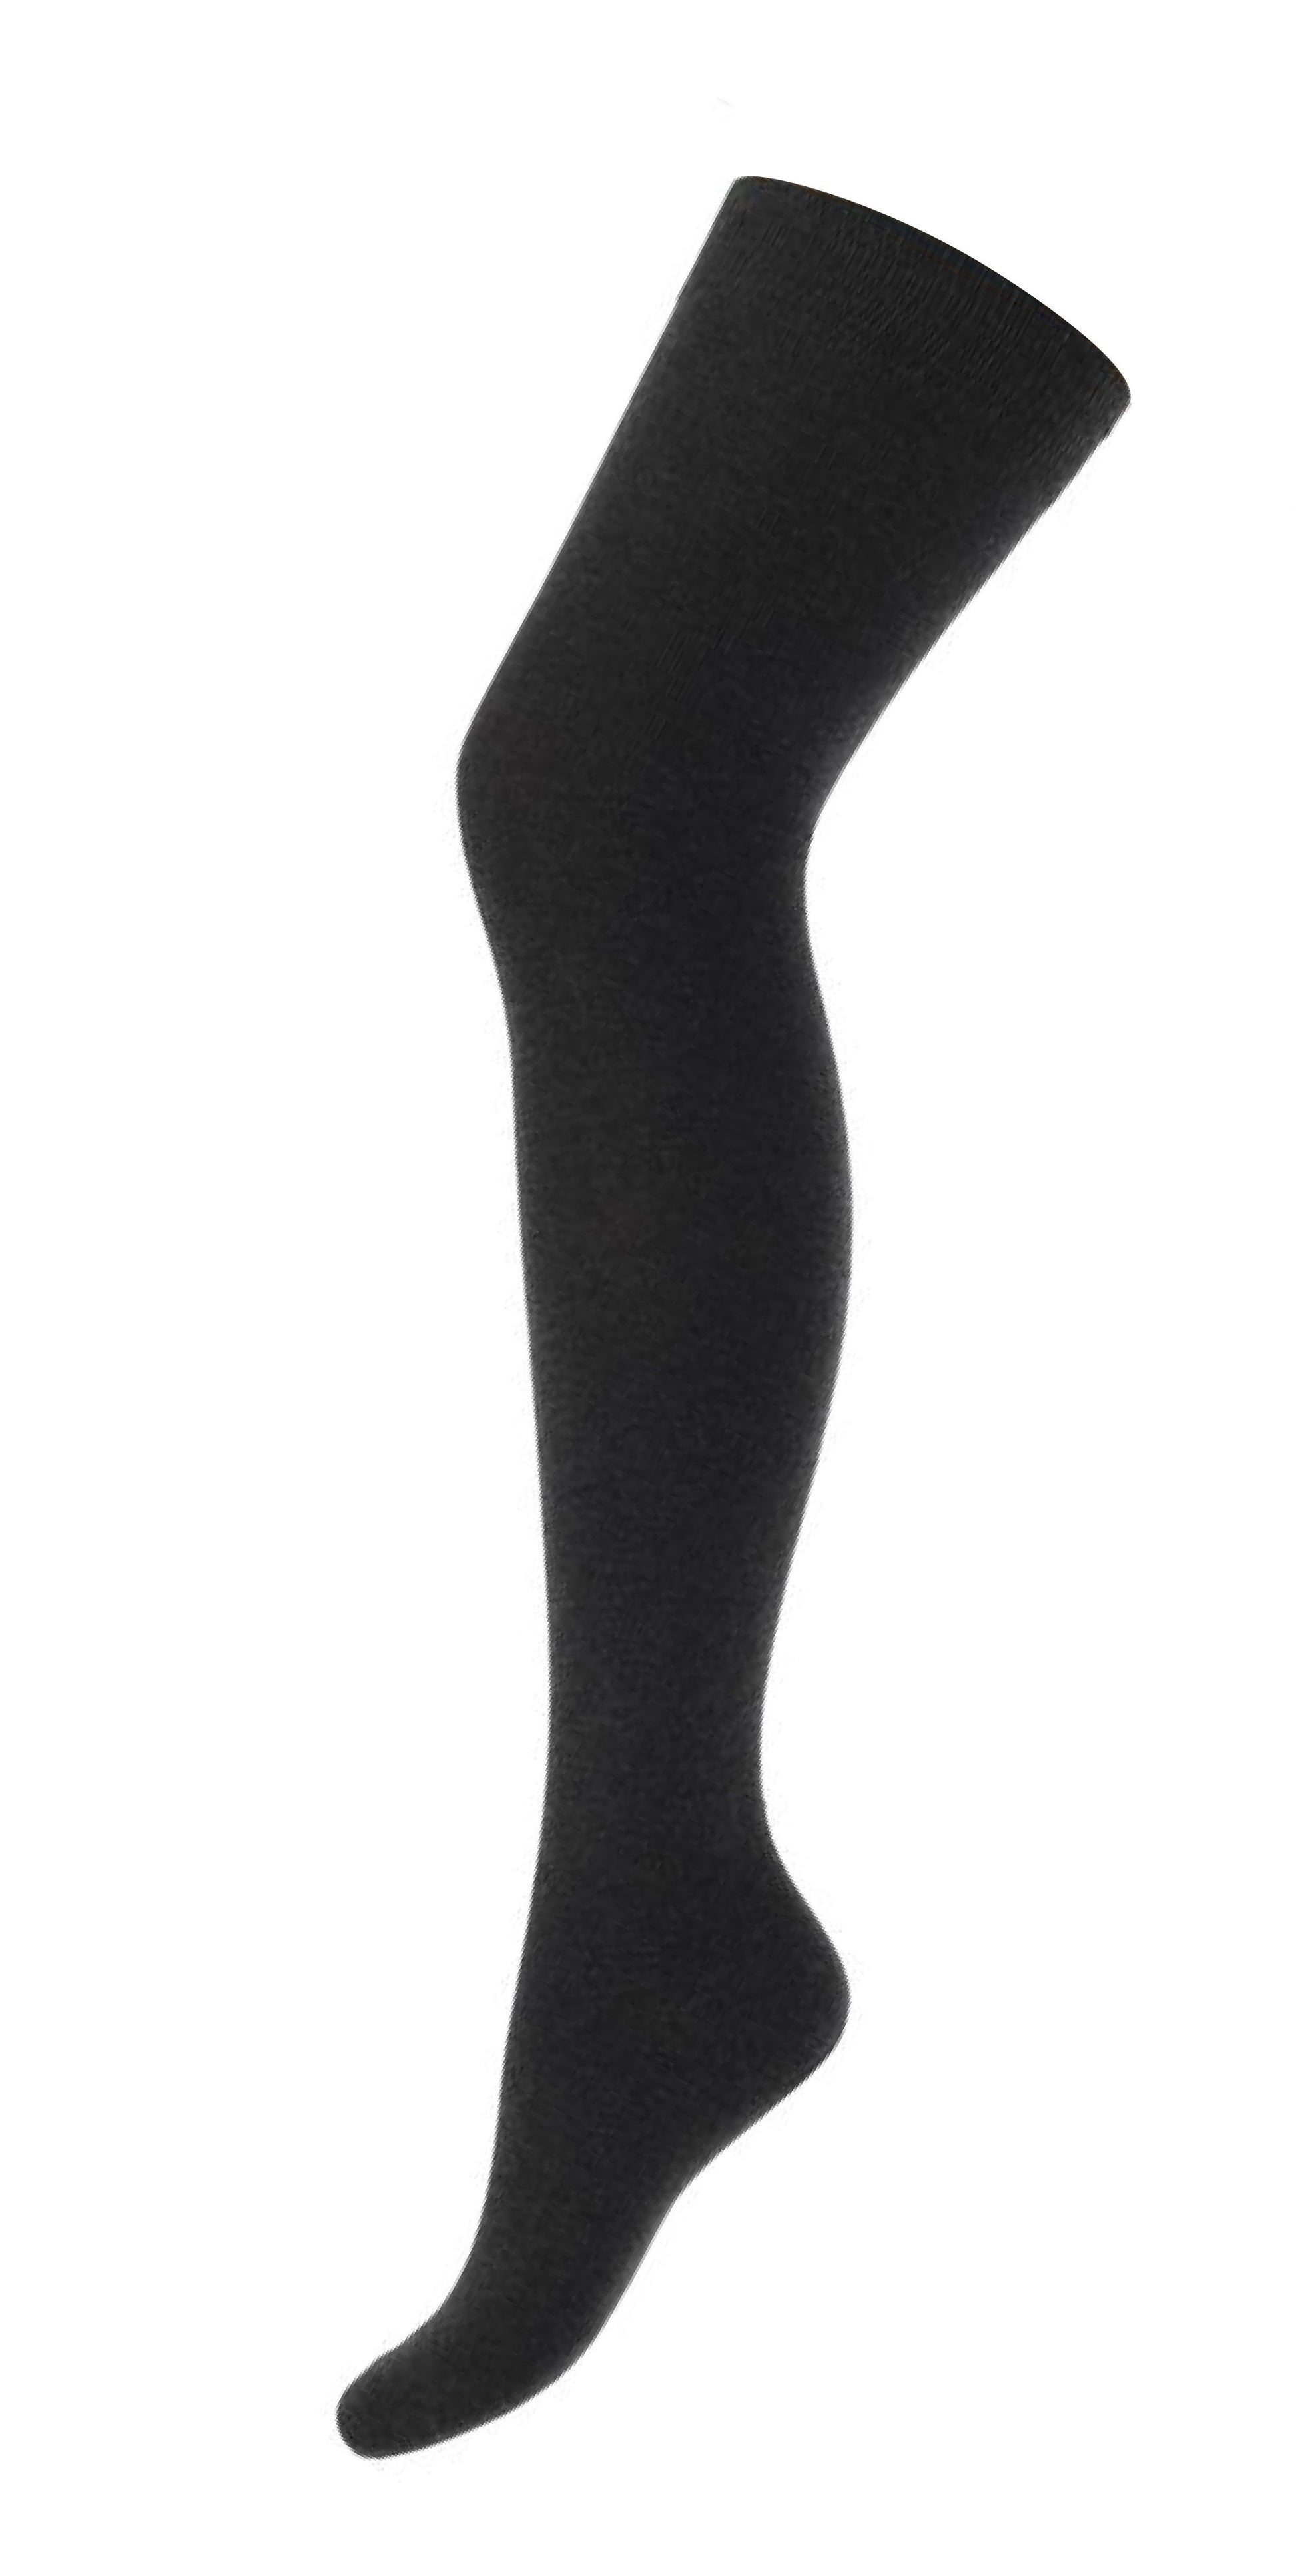 Bonnie Doon Cotton Over The Knee Sock P53496 - black cotton thigh high socks